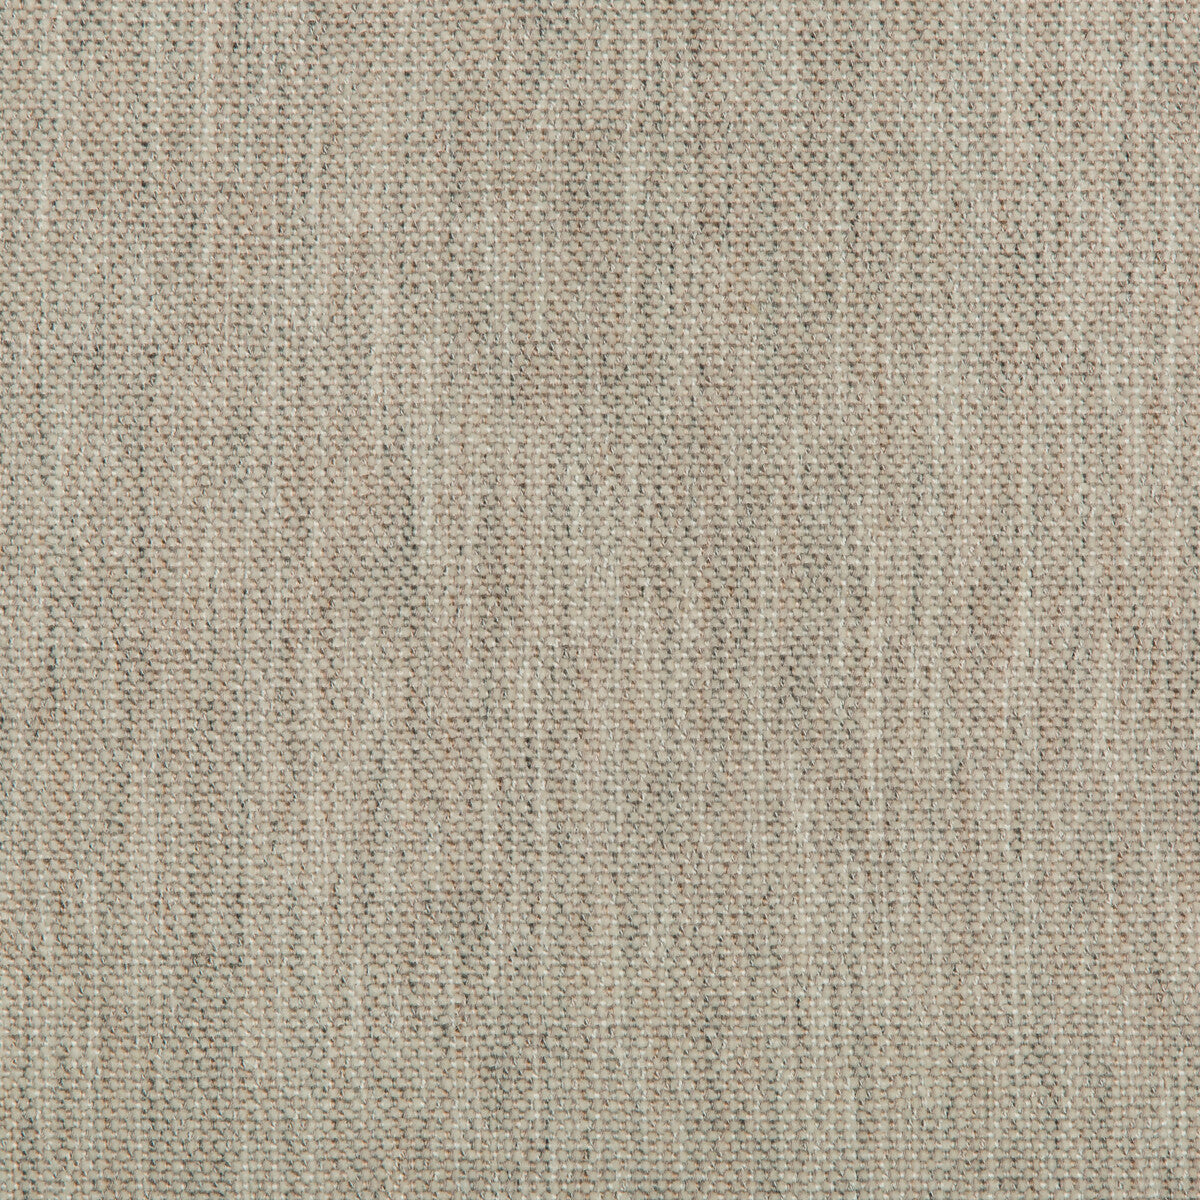 Kravet Smart fabric in 33577-1121 color - pattern 33577.1121.0 - by Kravet Smart